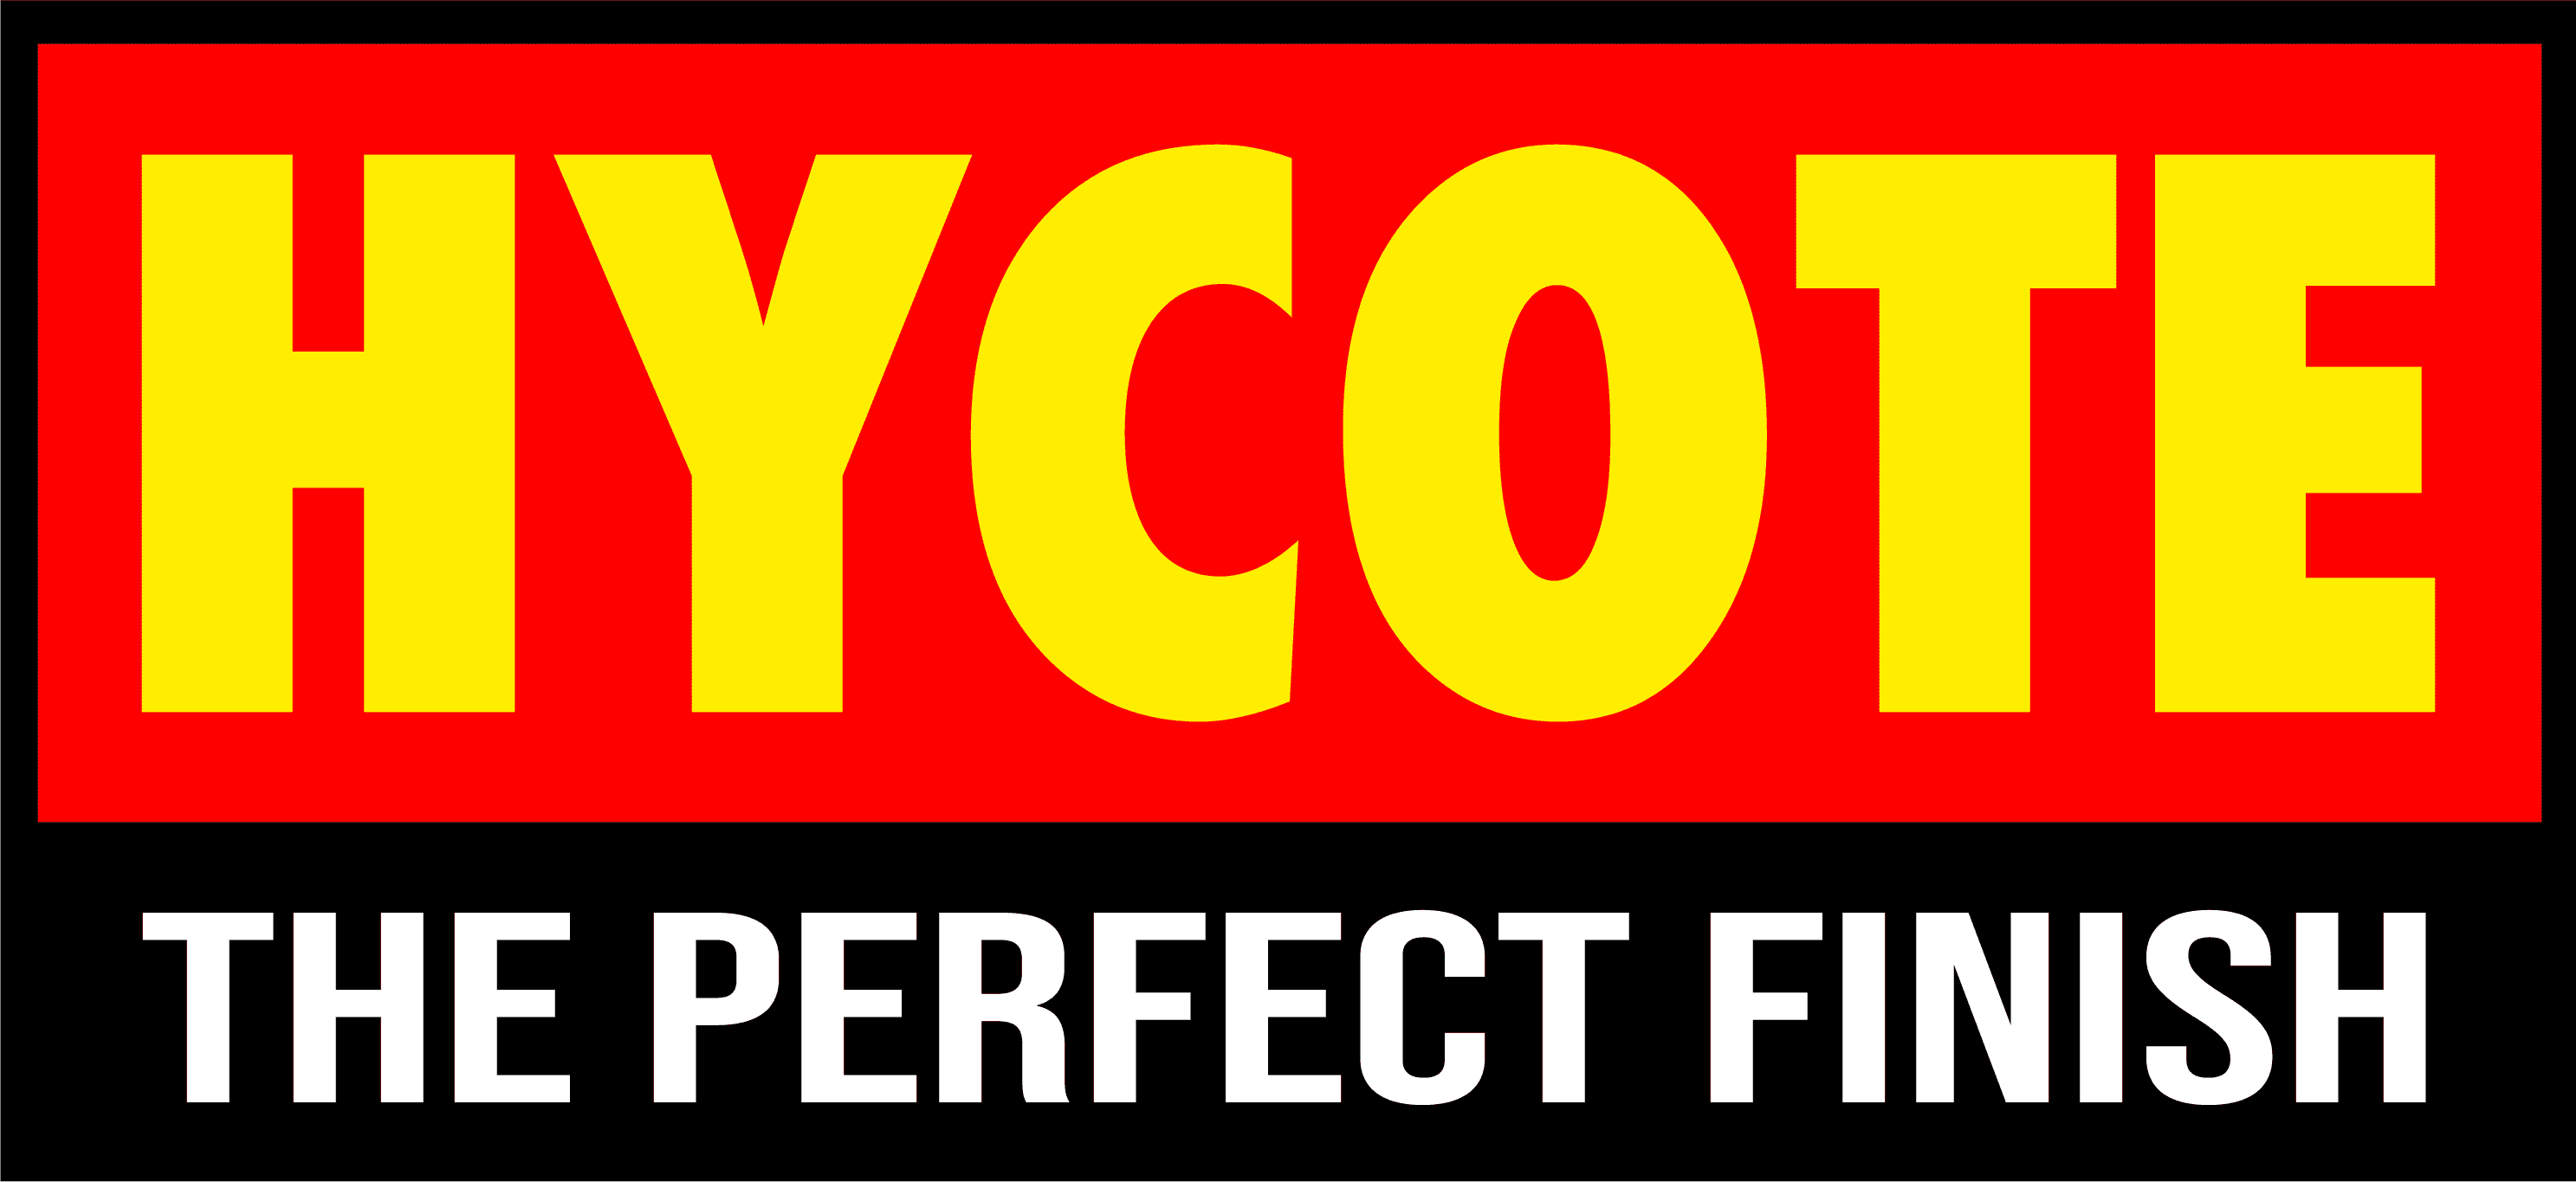 hycote logo